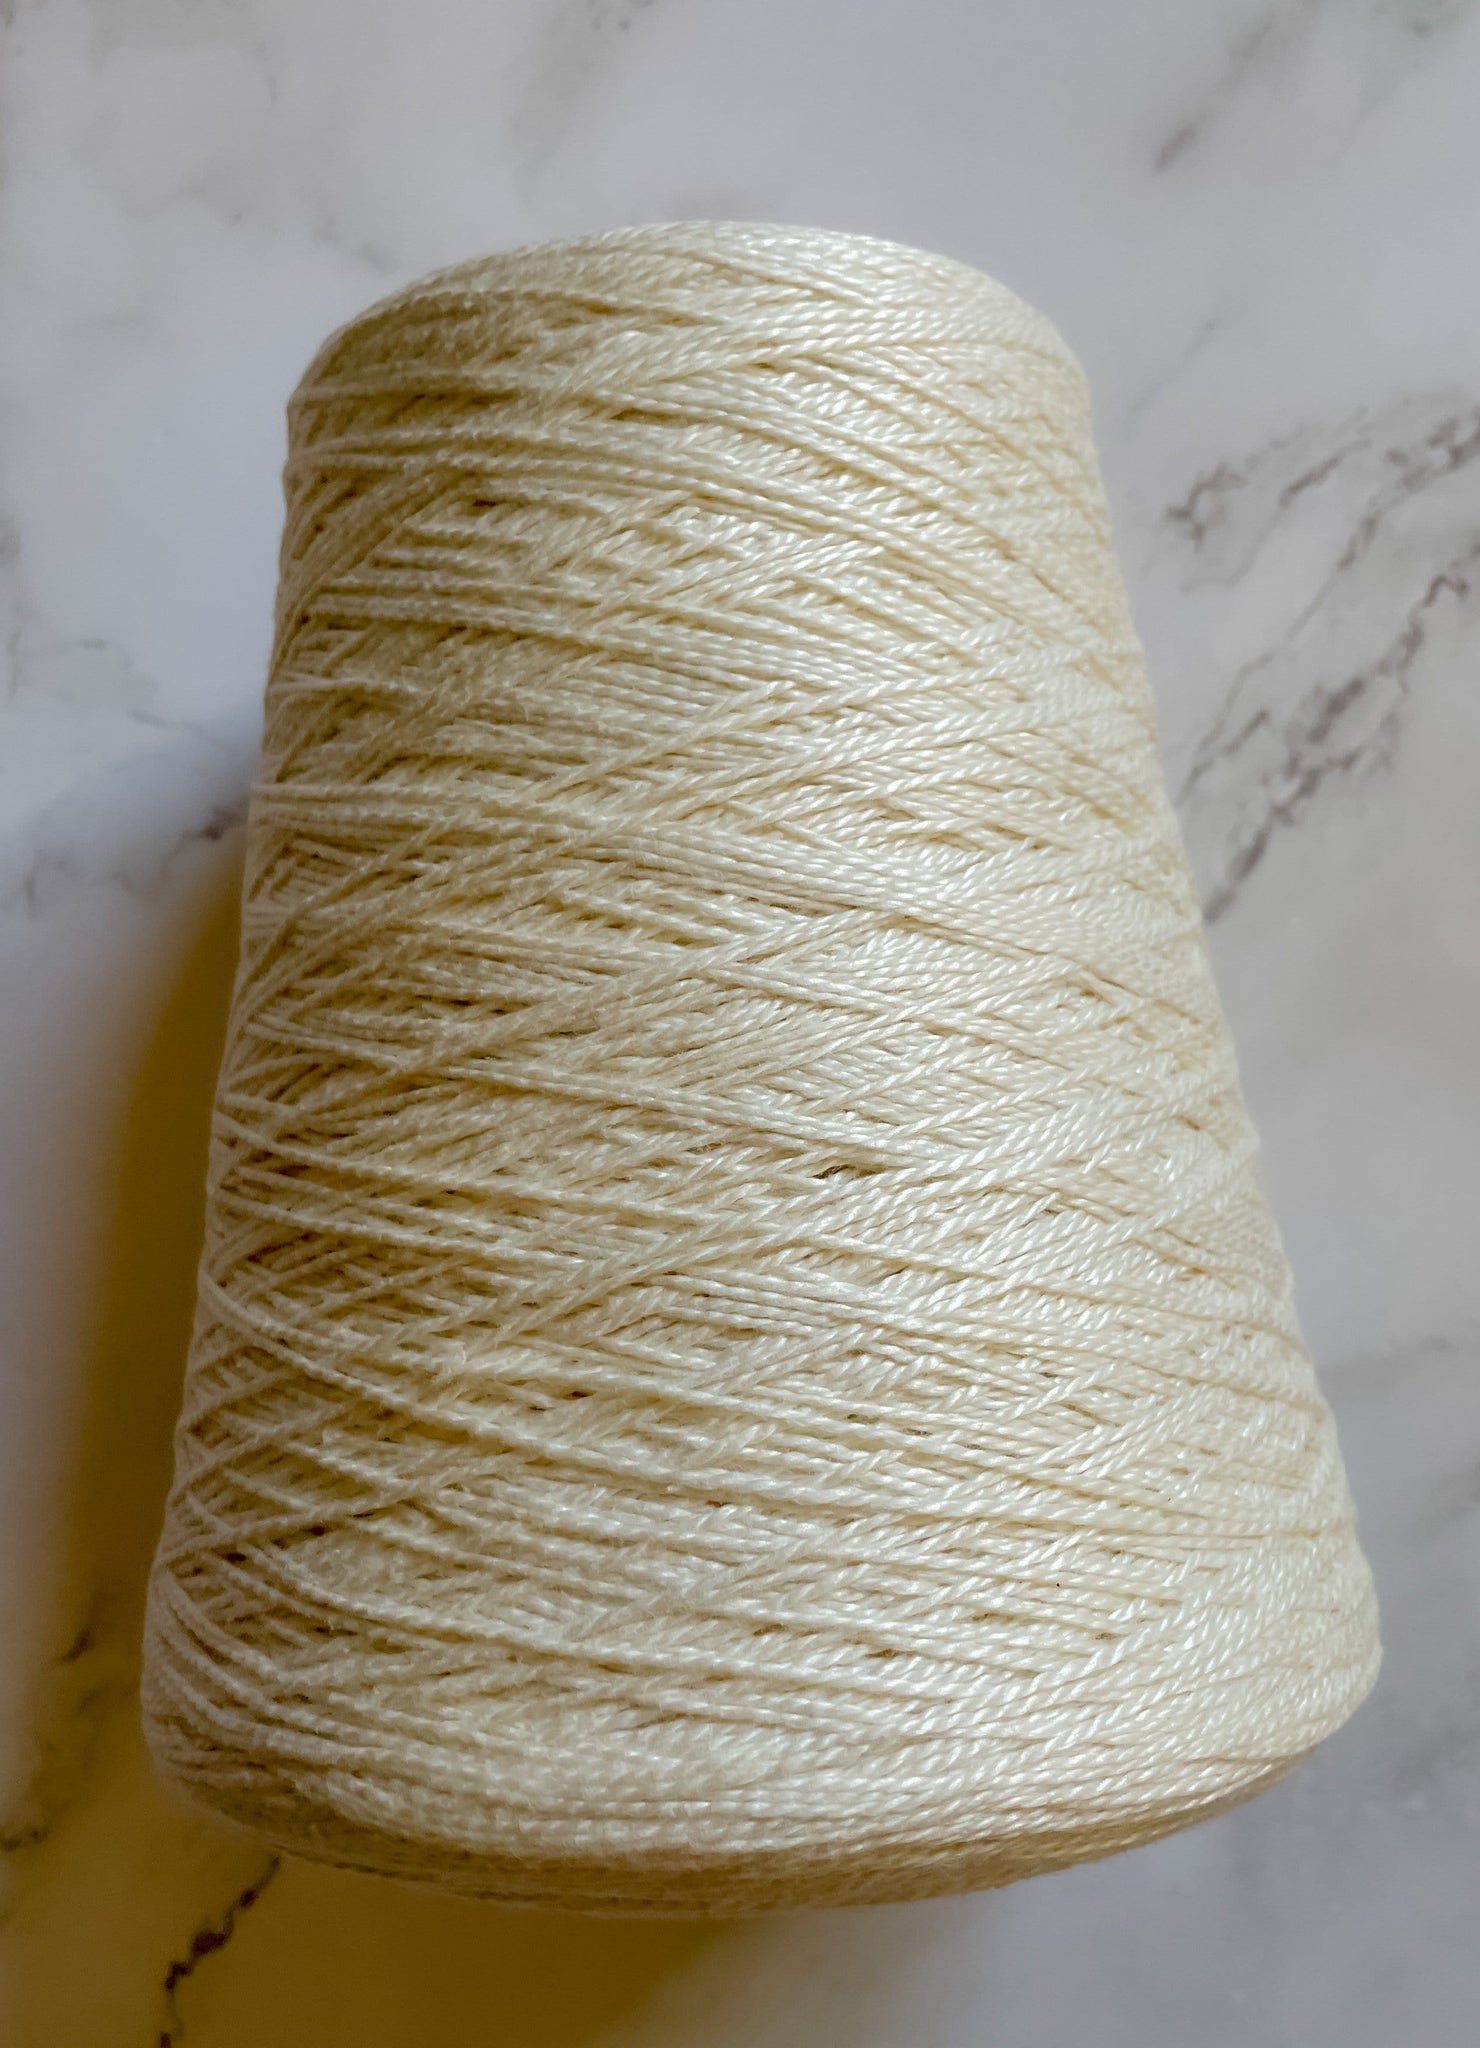 3 Skeins of Sensy Chino Soft Cotton Yarn, Soft Baby Cotton Yarn